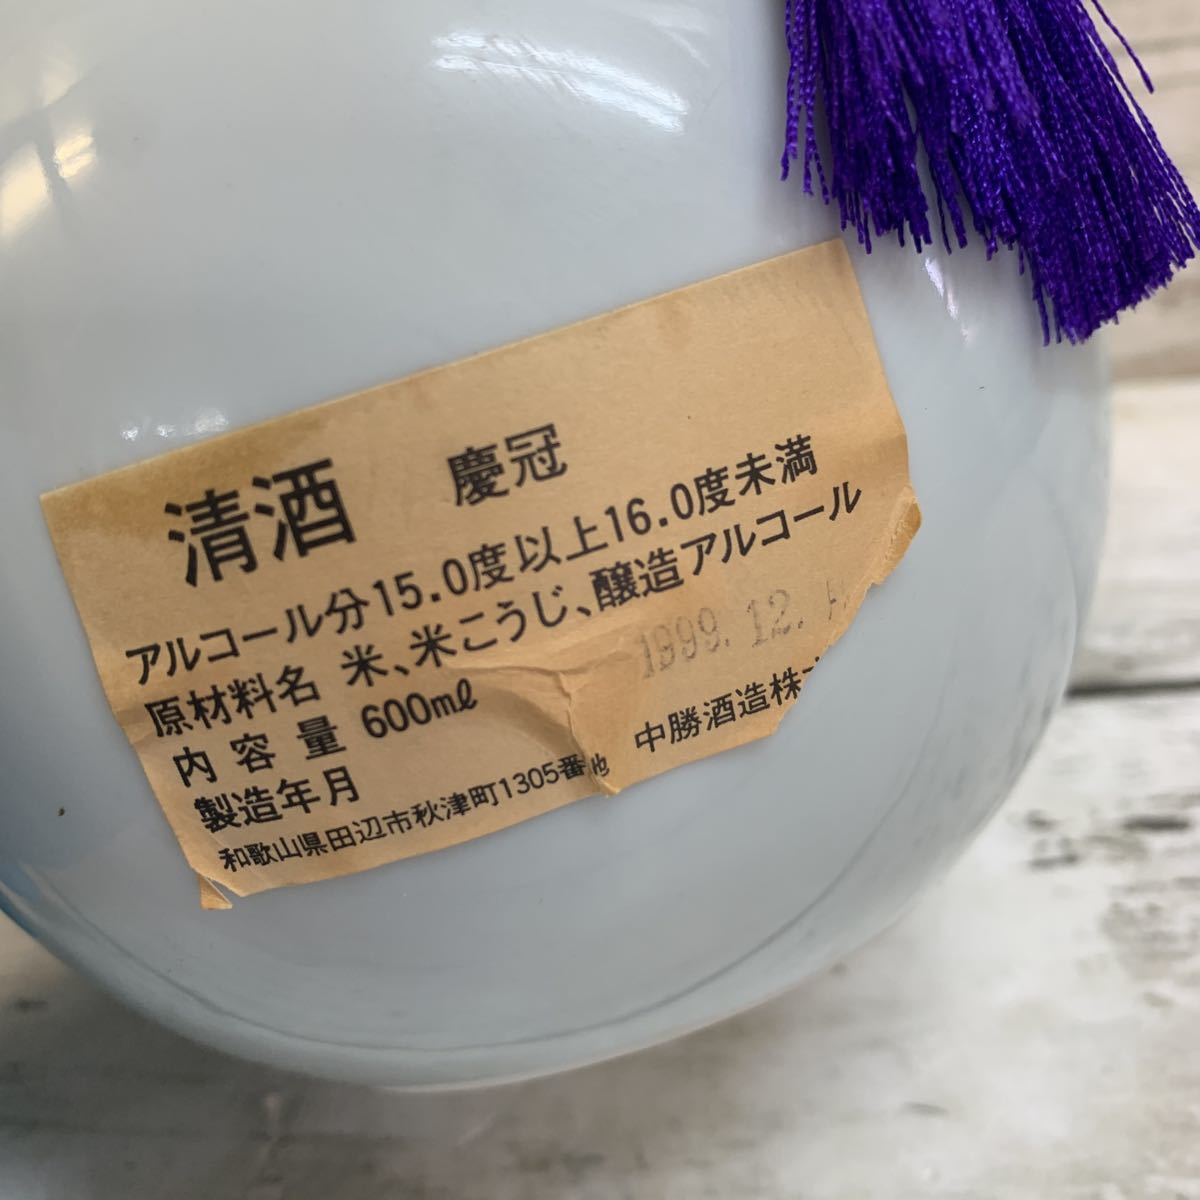 [ старый sake ] не . штекер средний . sake структура Kiyoshi sake ..600ml 1999 год керамика рис sake Wakayama префектура 15 раз и больше 